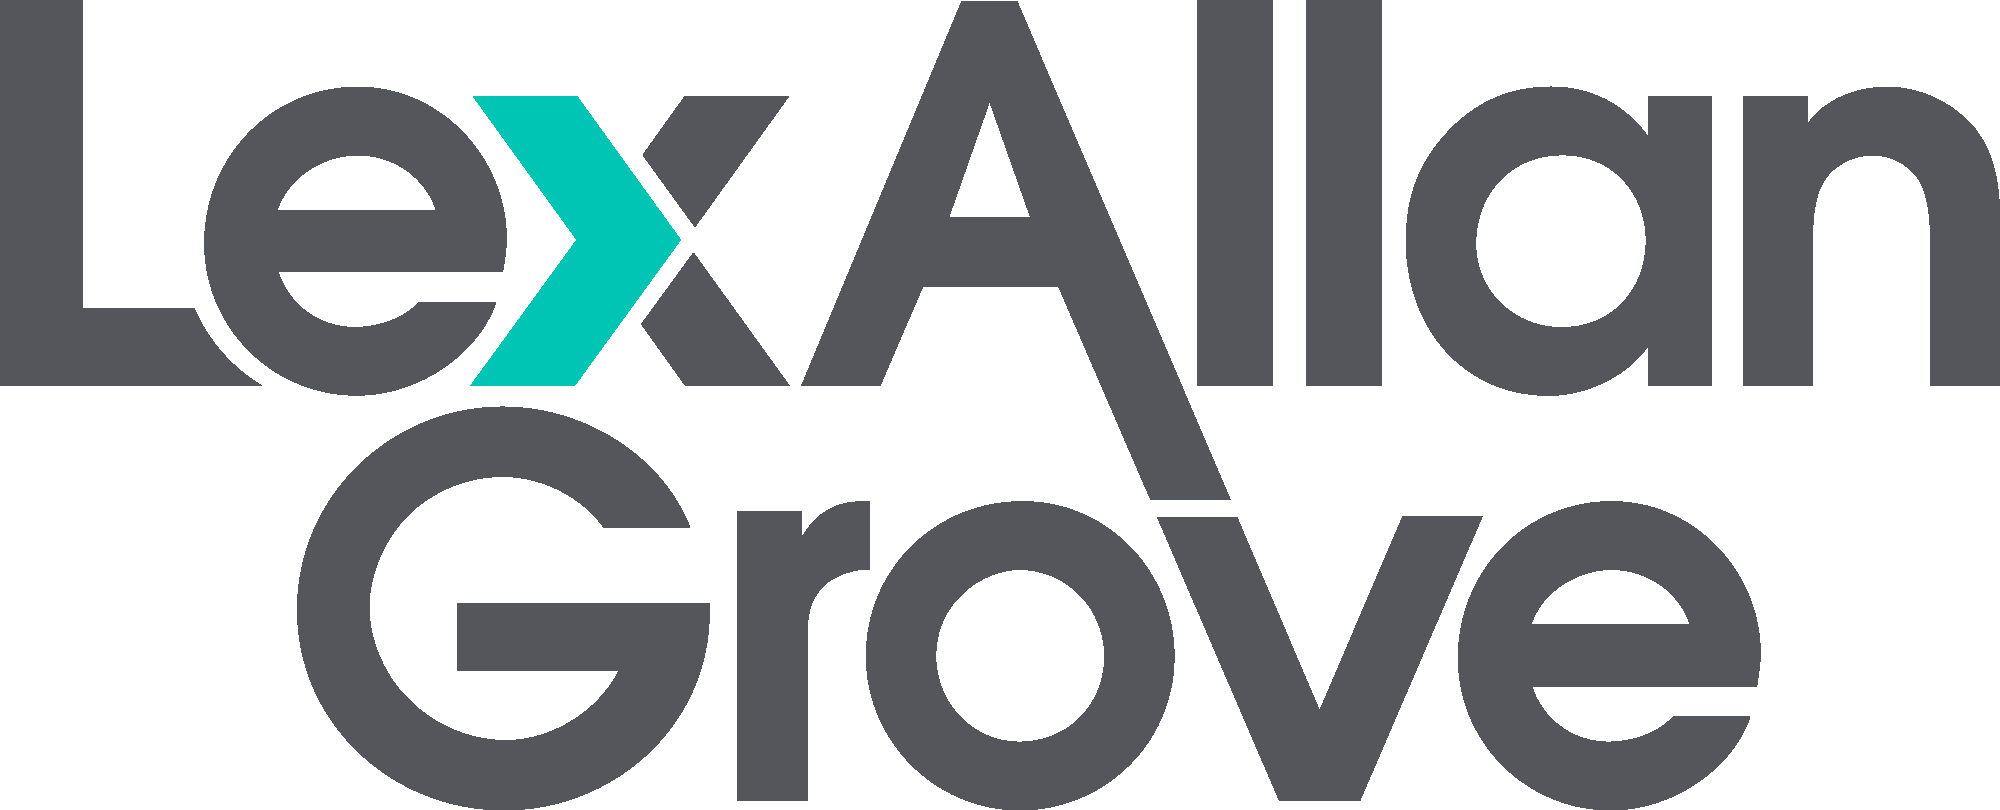 Lex Logo - Estate Agents in Stourbridge, Halesowen, Hagley | Lex Allan Grove